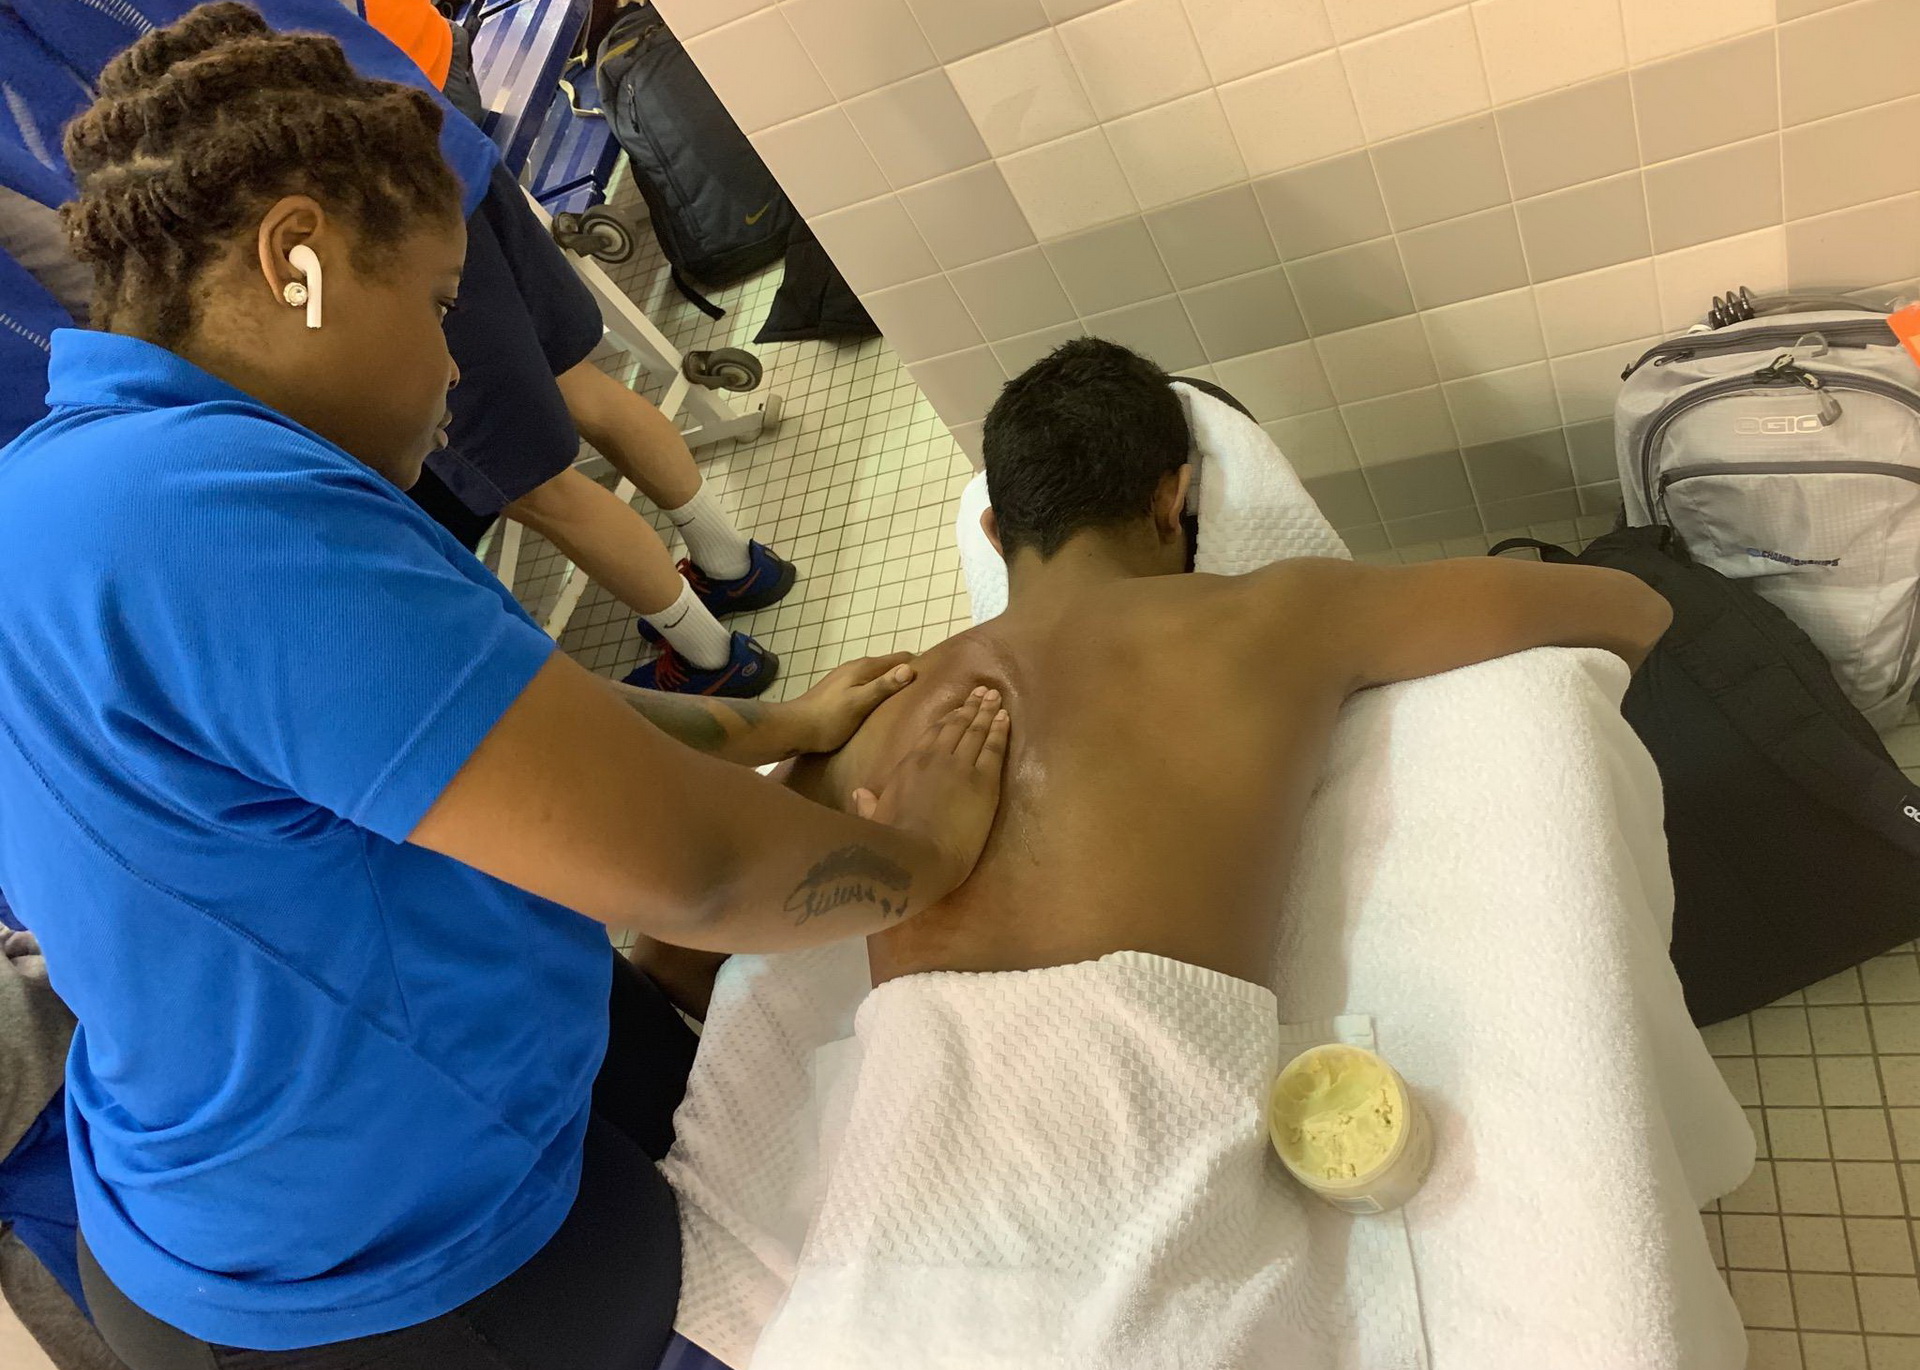 athlete receiving sports massage in locker room